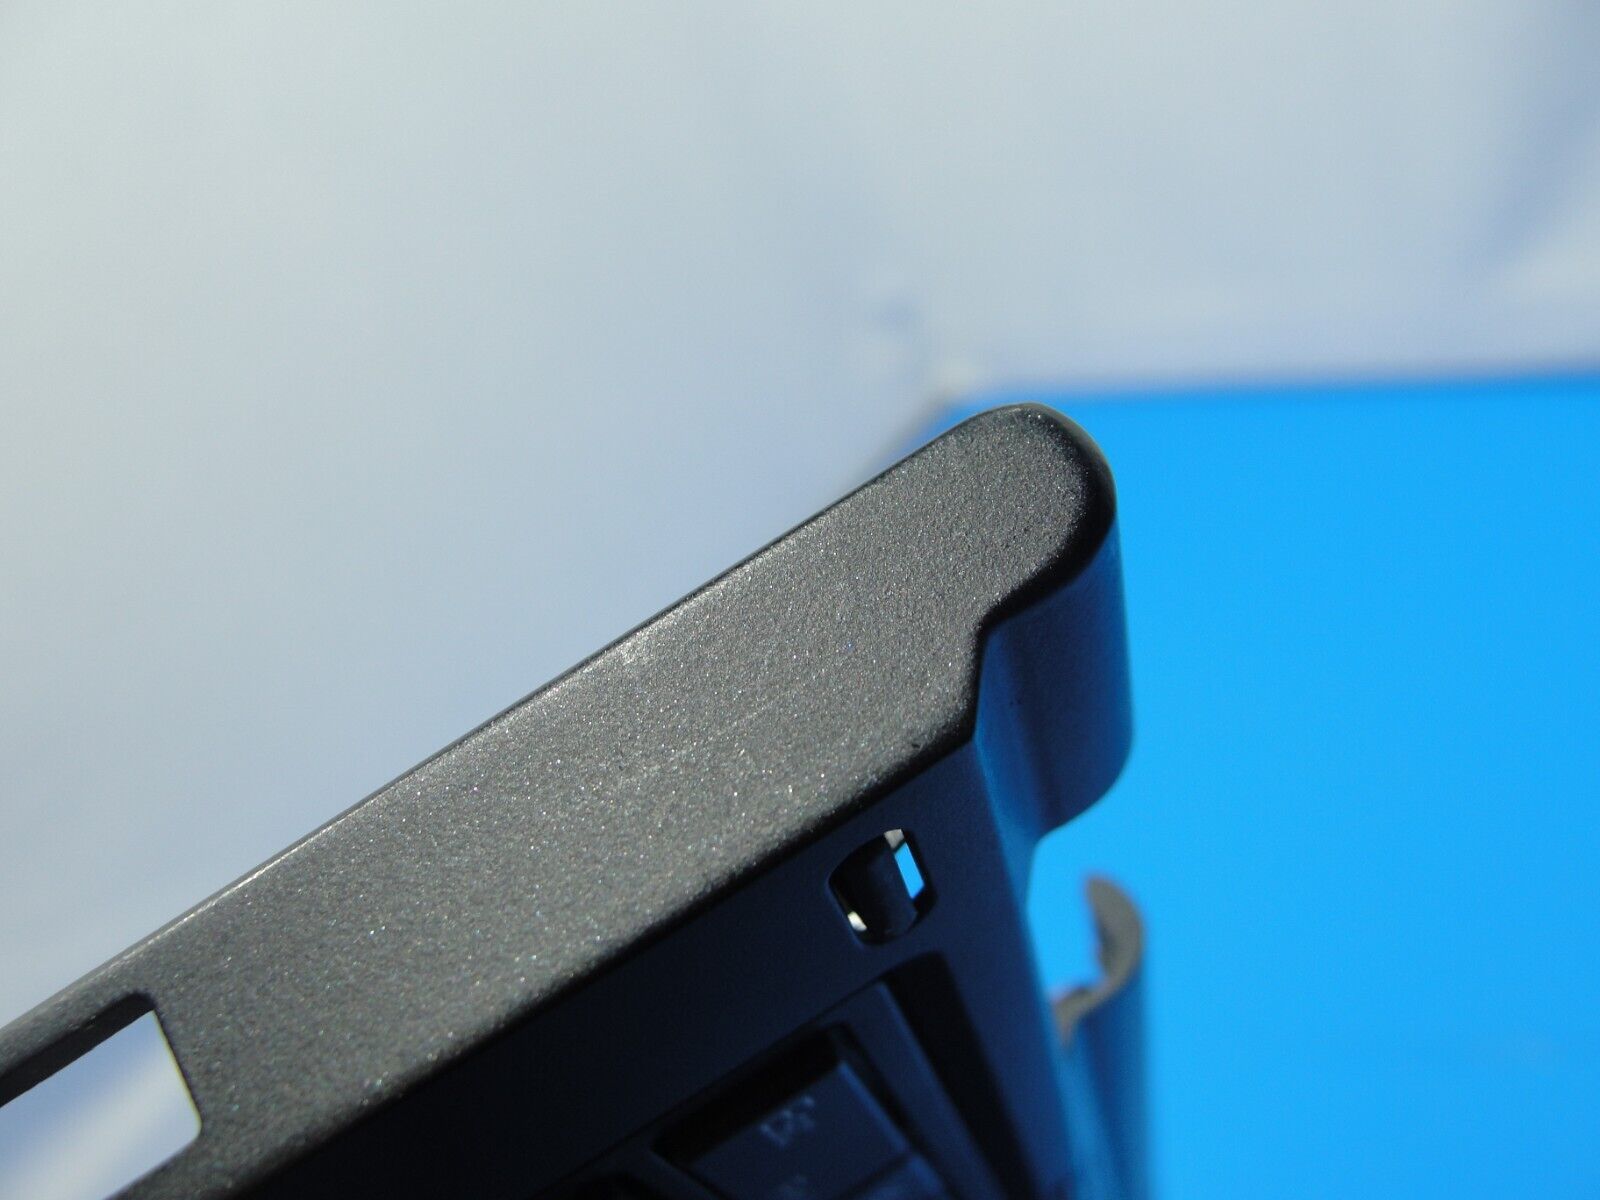 Lenovo ThinkPad Yoga 12.5